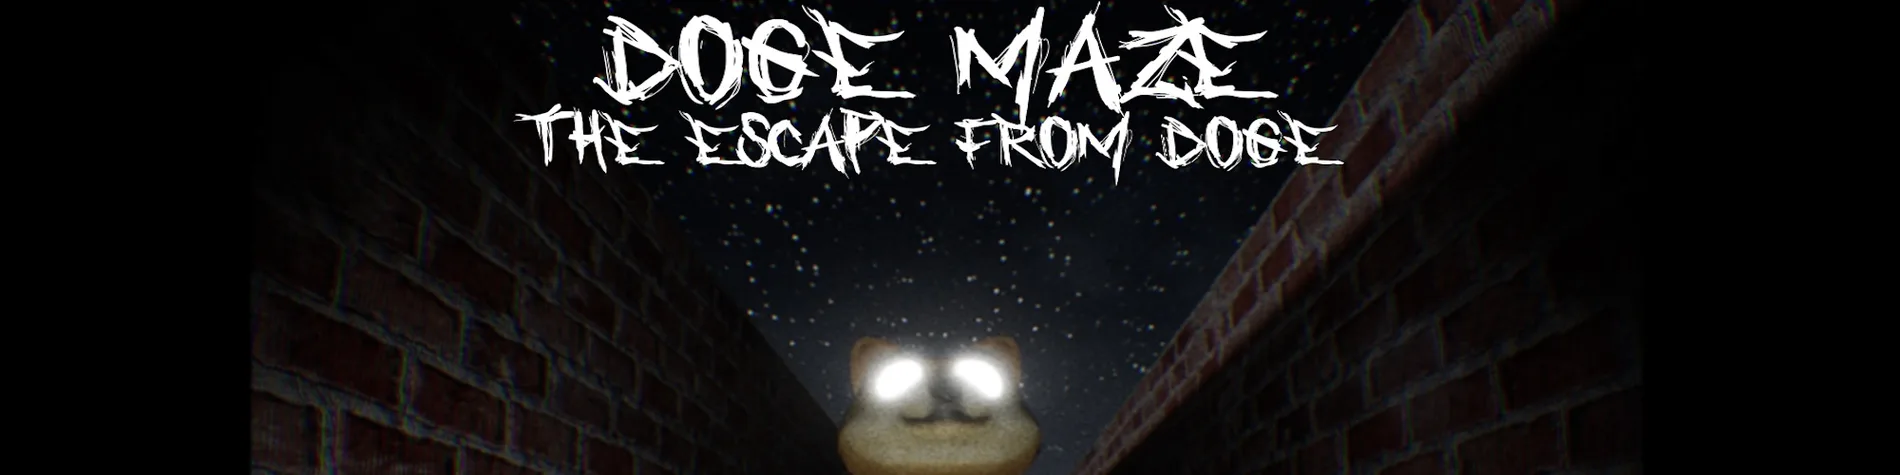 Doge maze